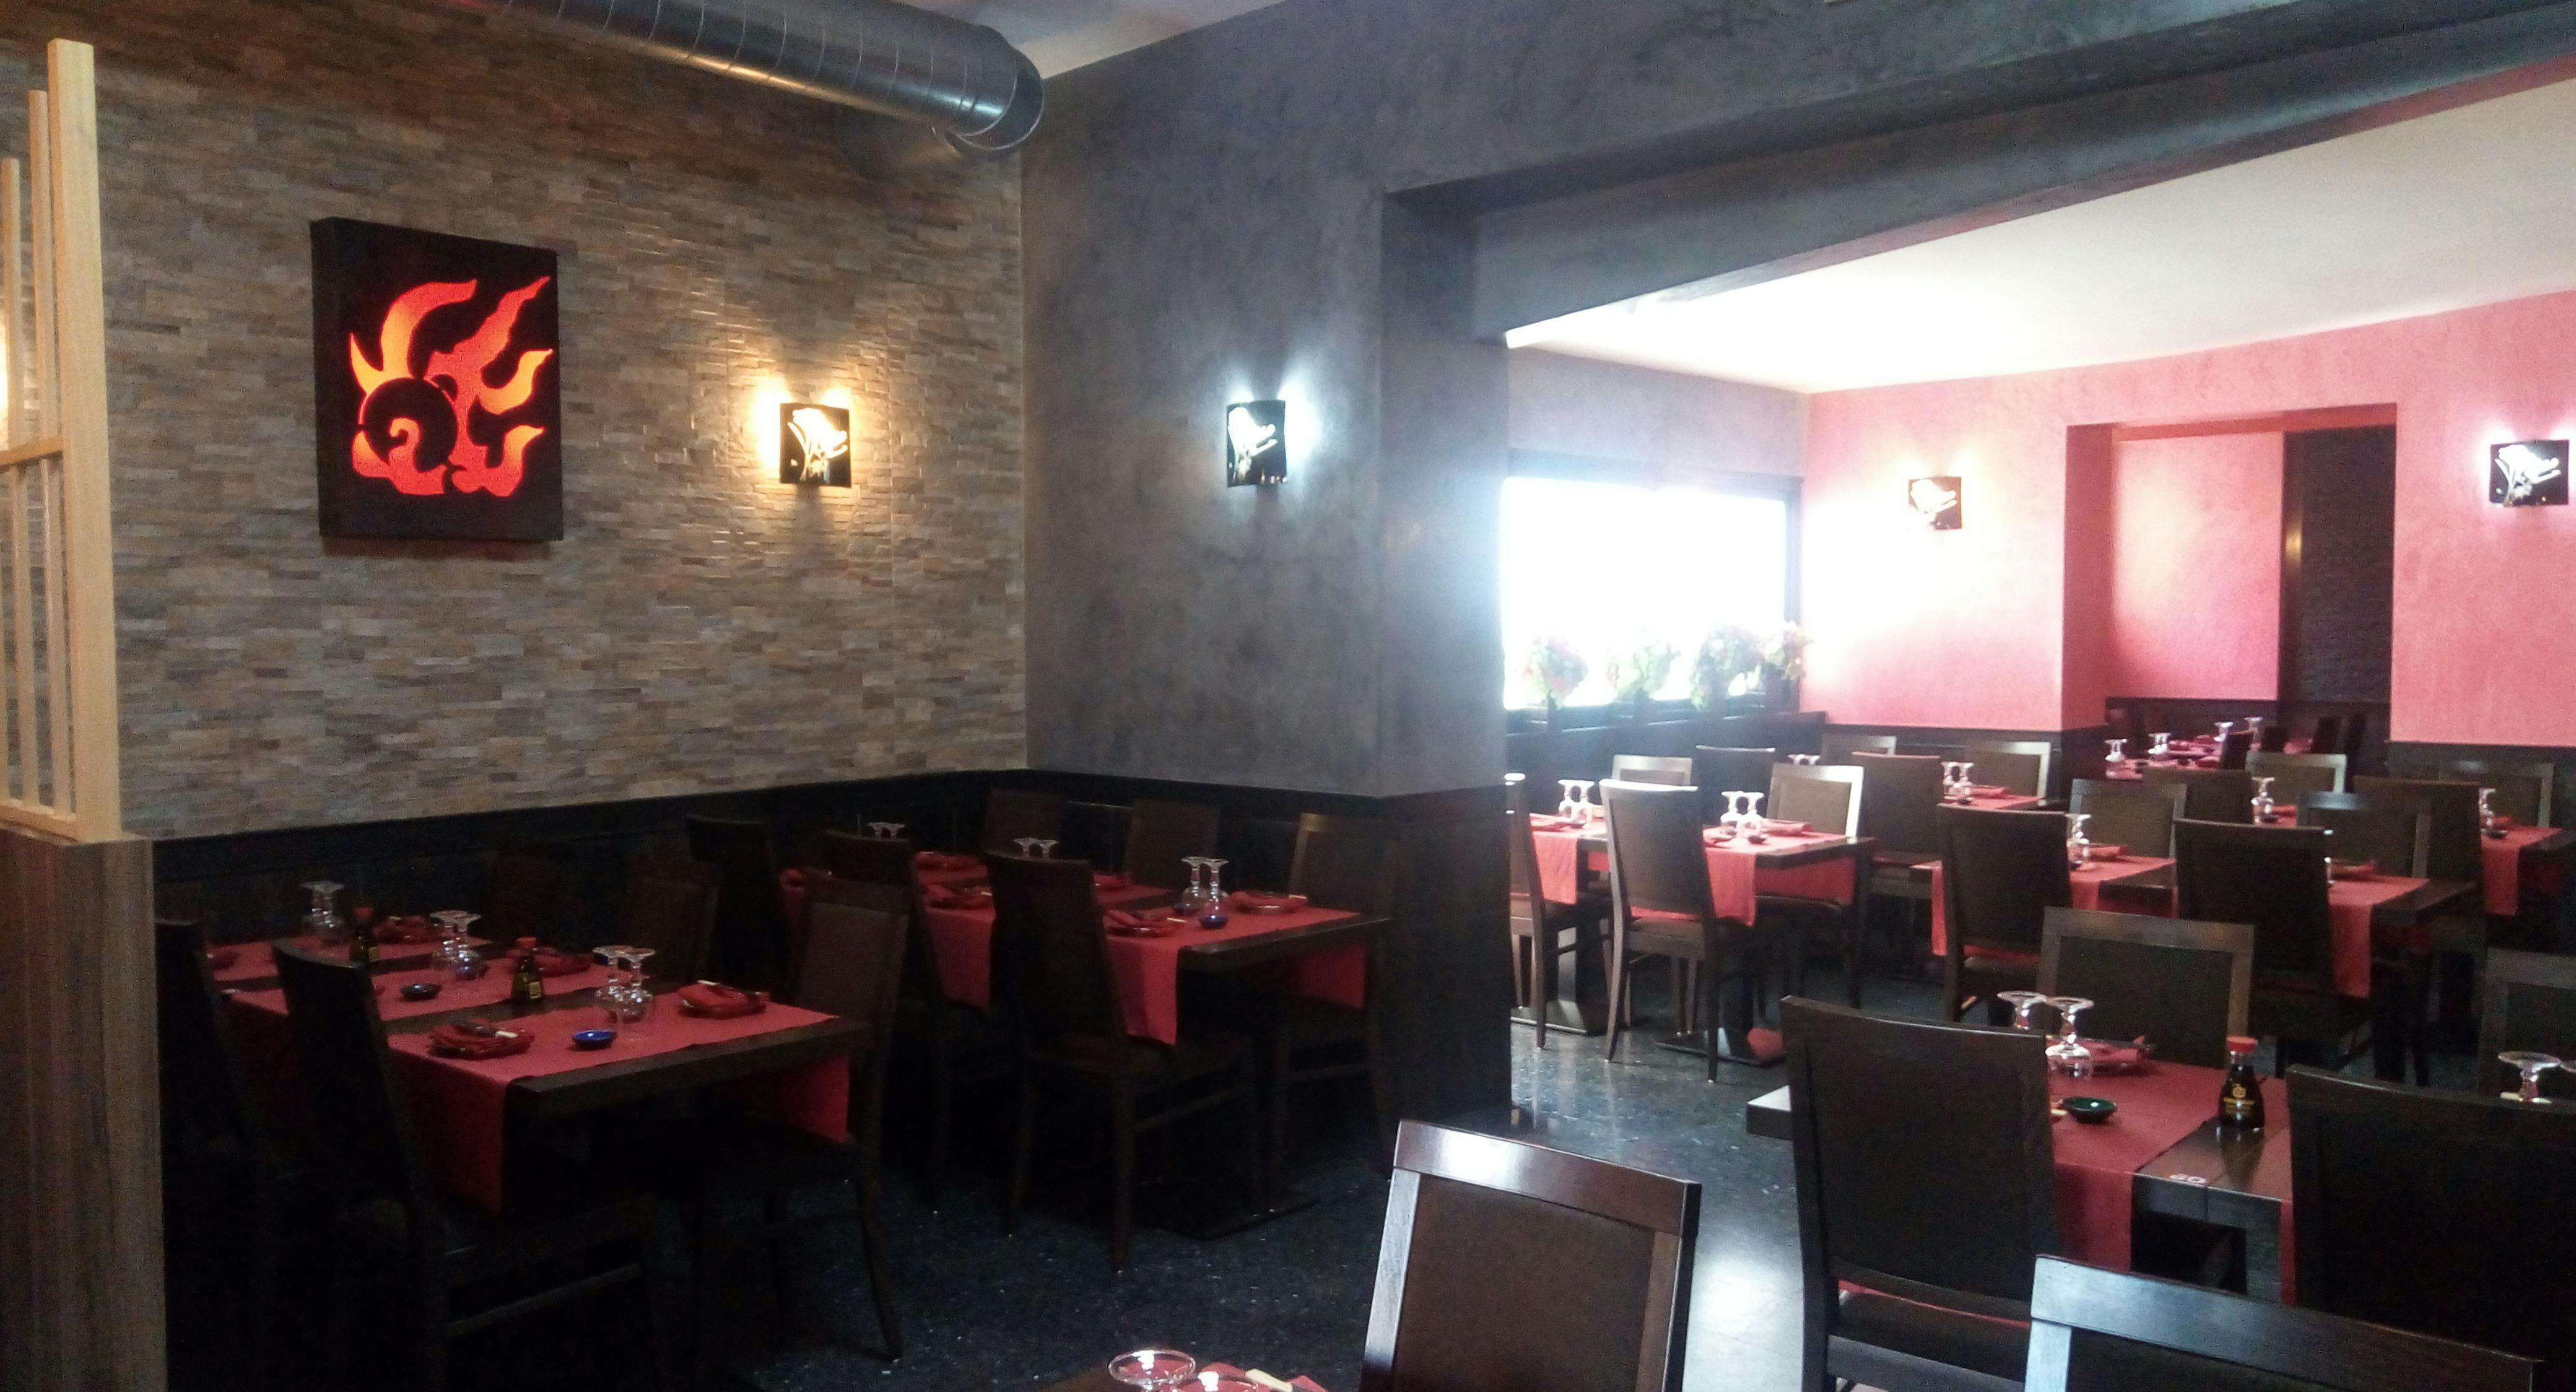 Photo of restaurant Kasai Sushi - Monza in Monza, Monza and Brianza